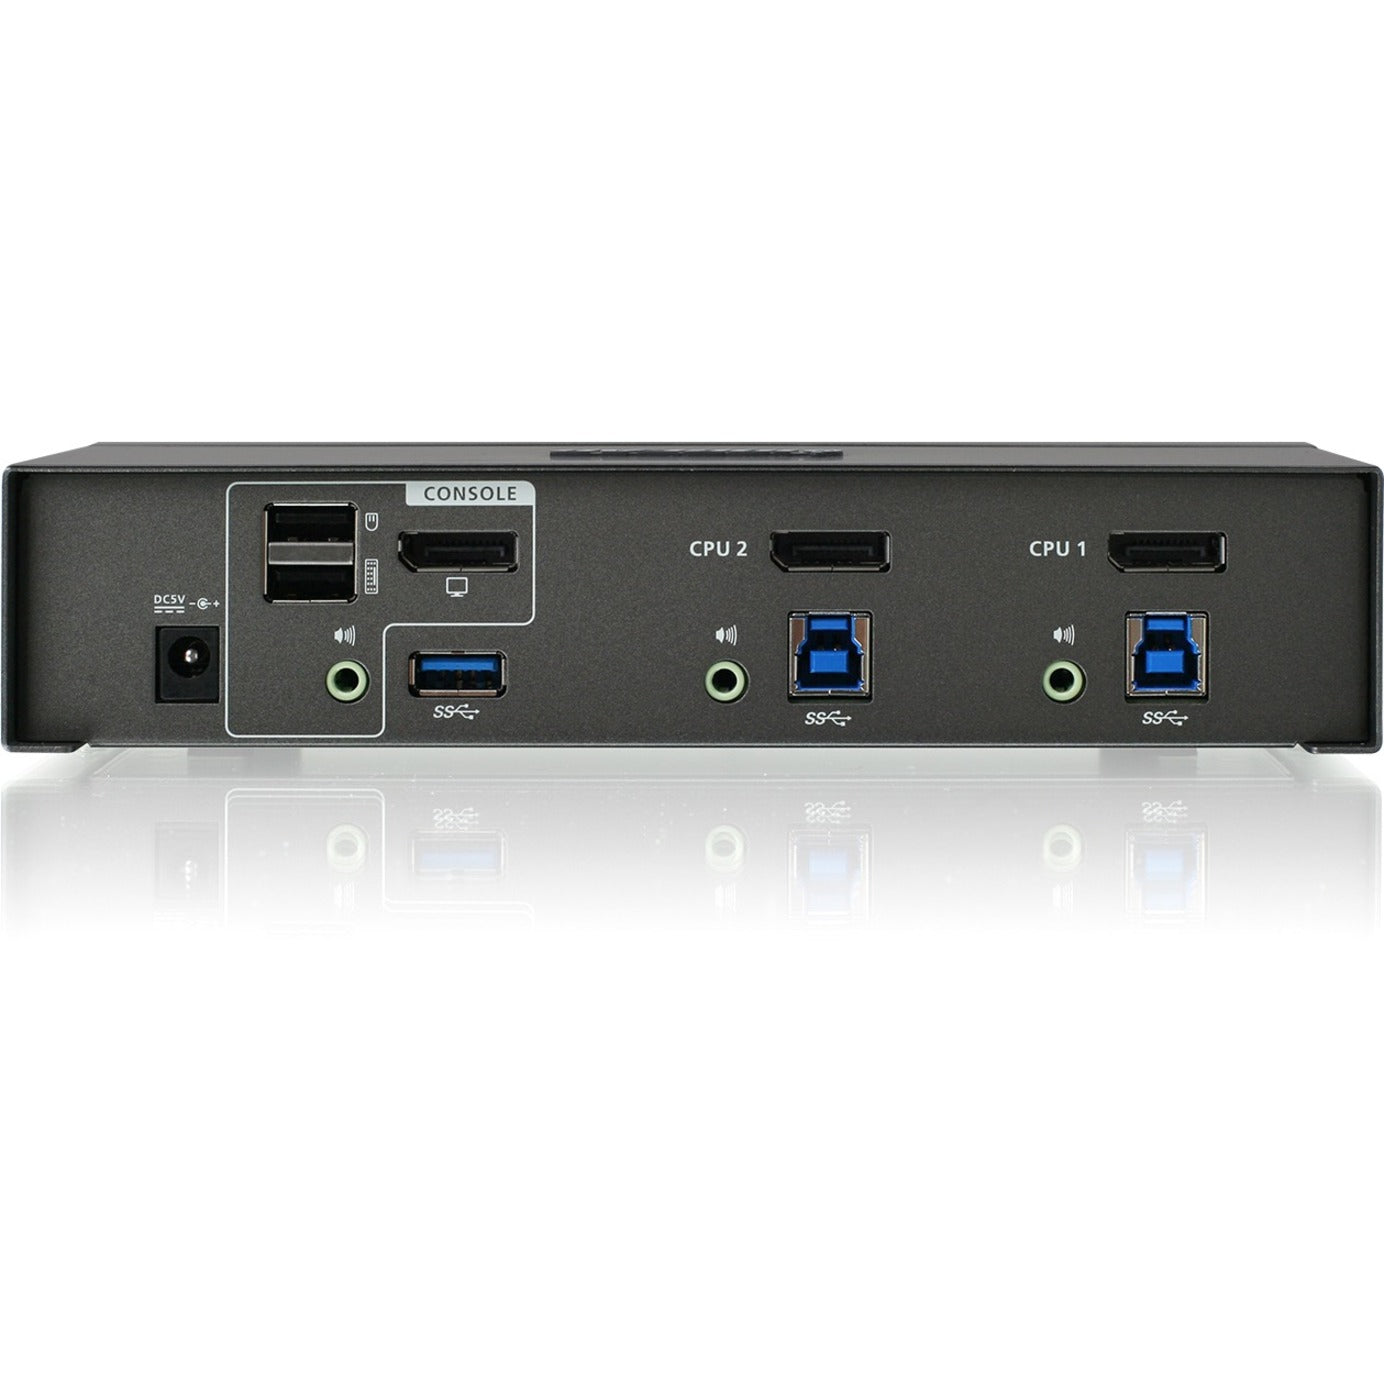 IOGEAR GCS1902 2-Port DisplayPort KVMP Switch with USB 3.0 Hub, Expand USB 3.0 Peripherals Connection